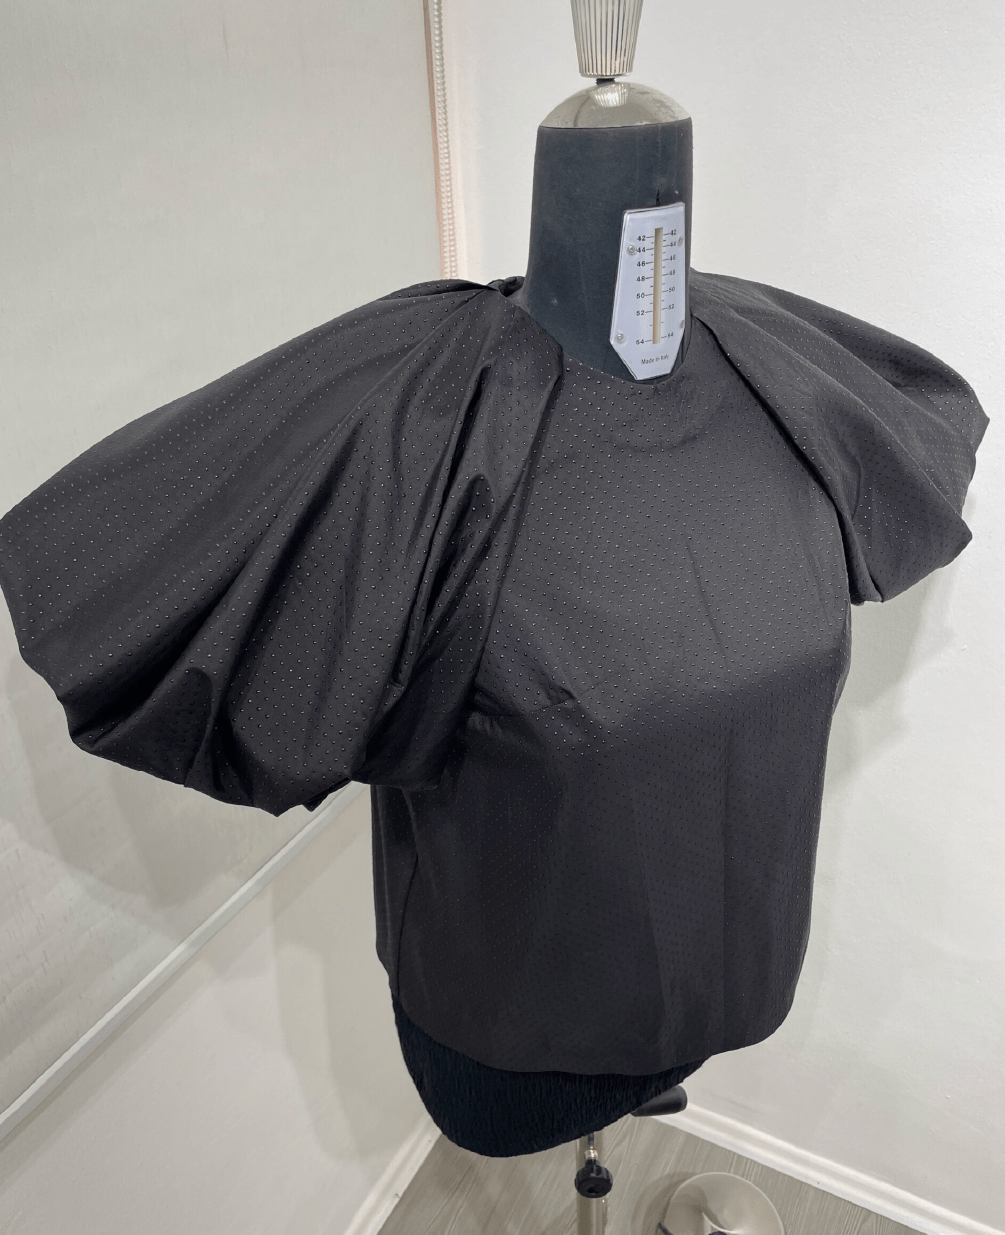 Fantasie blouse: Black